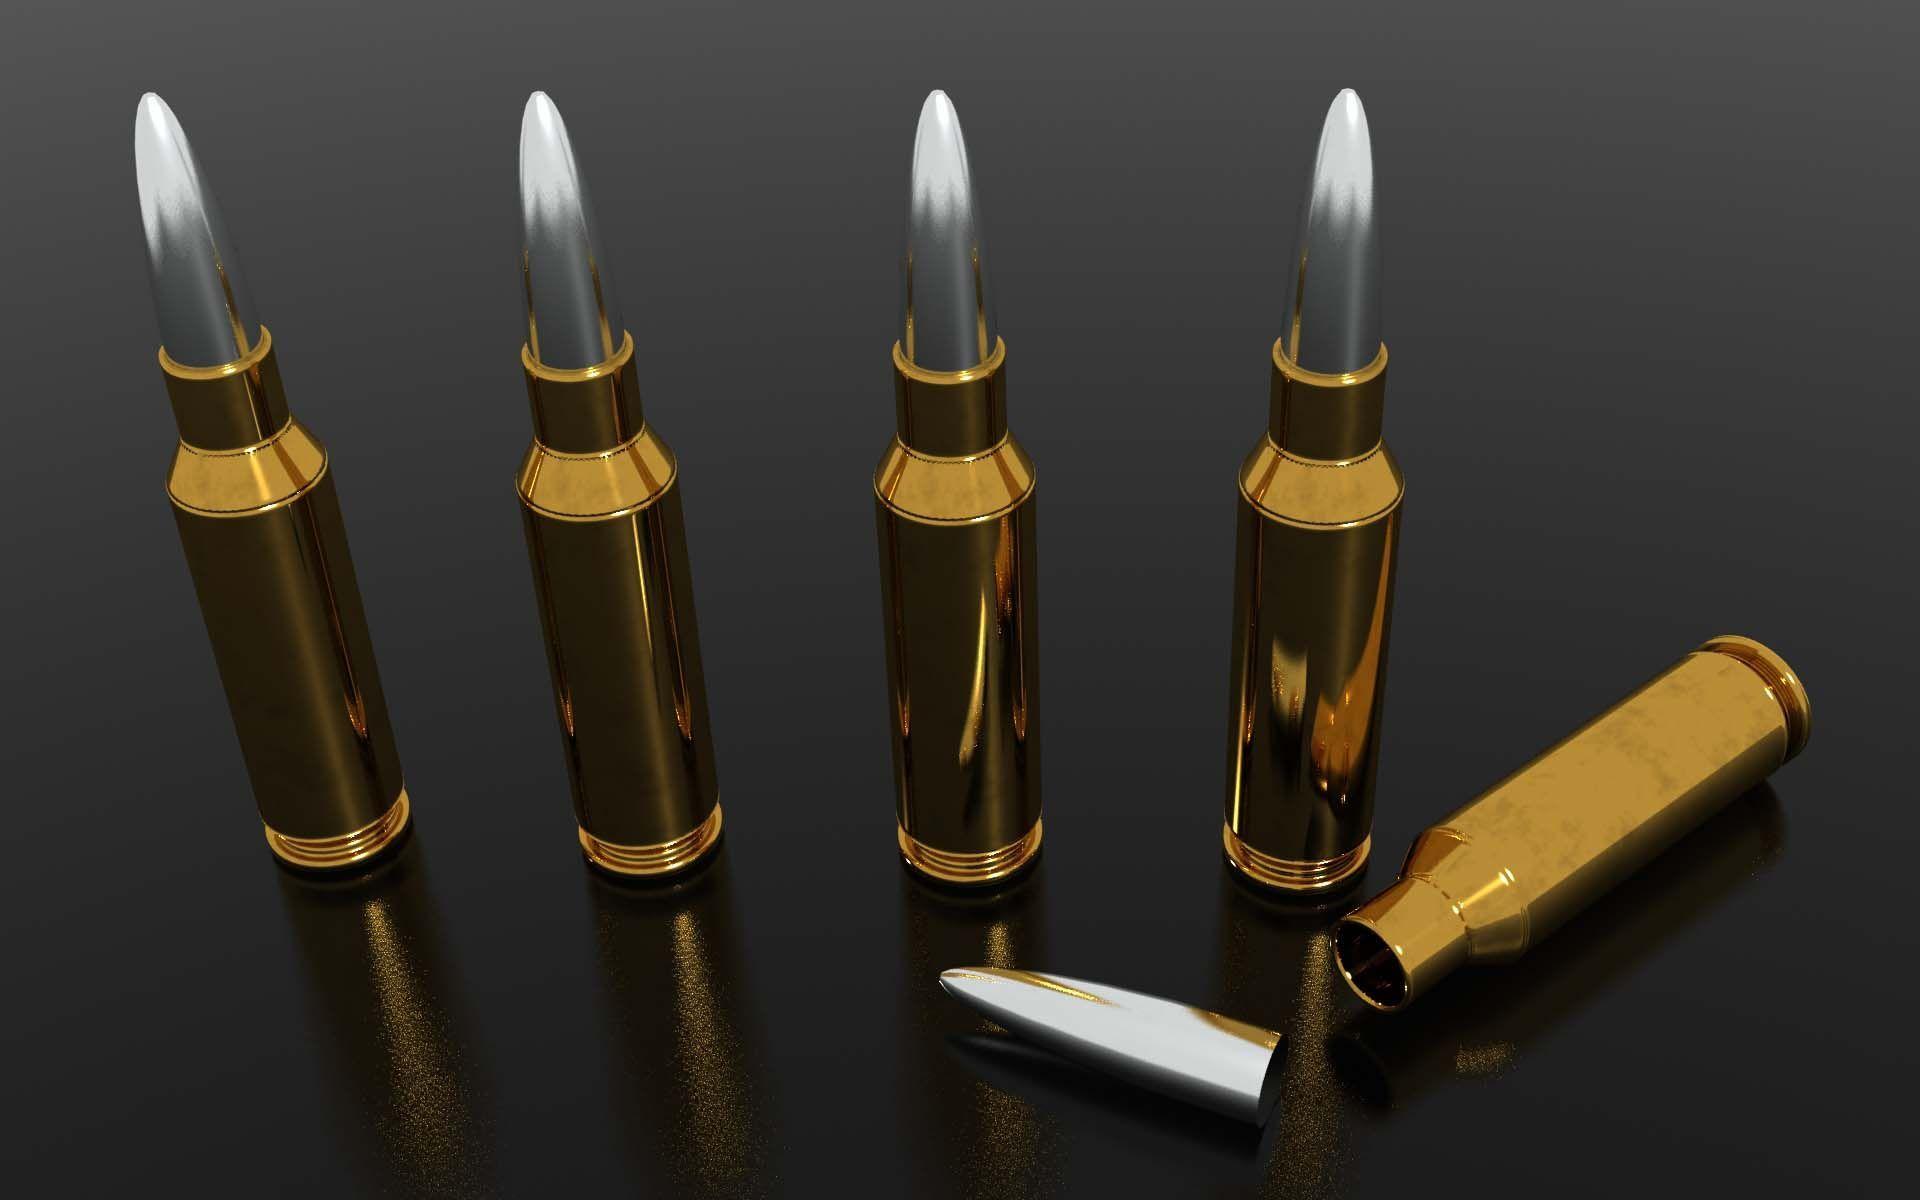 Bullets. HD Guns Wallpaper for Mobile and Desktop